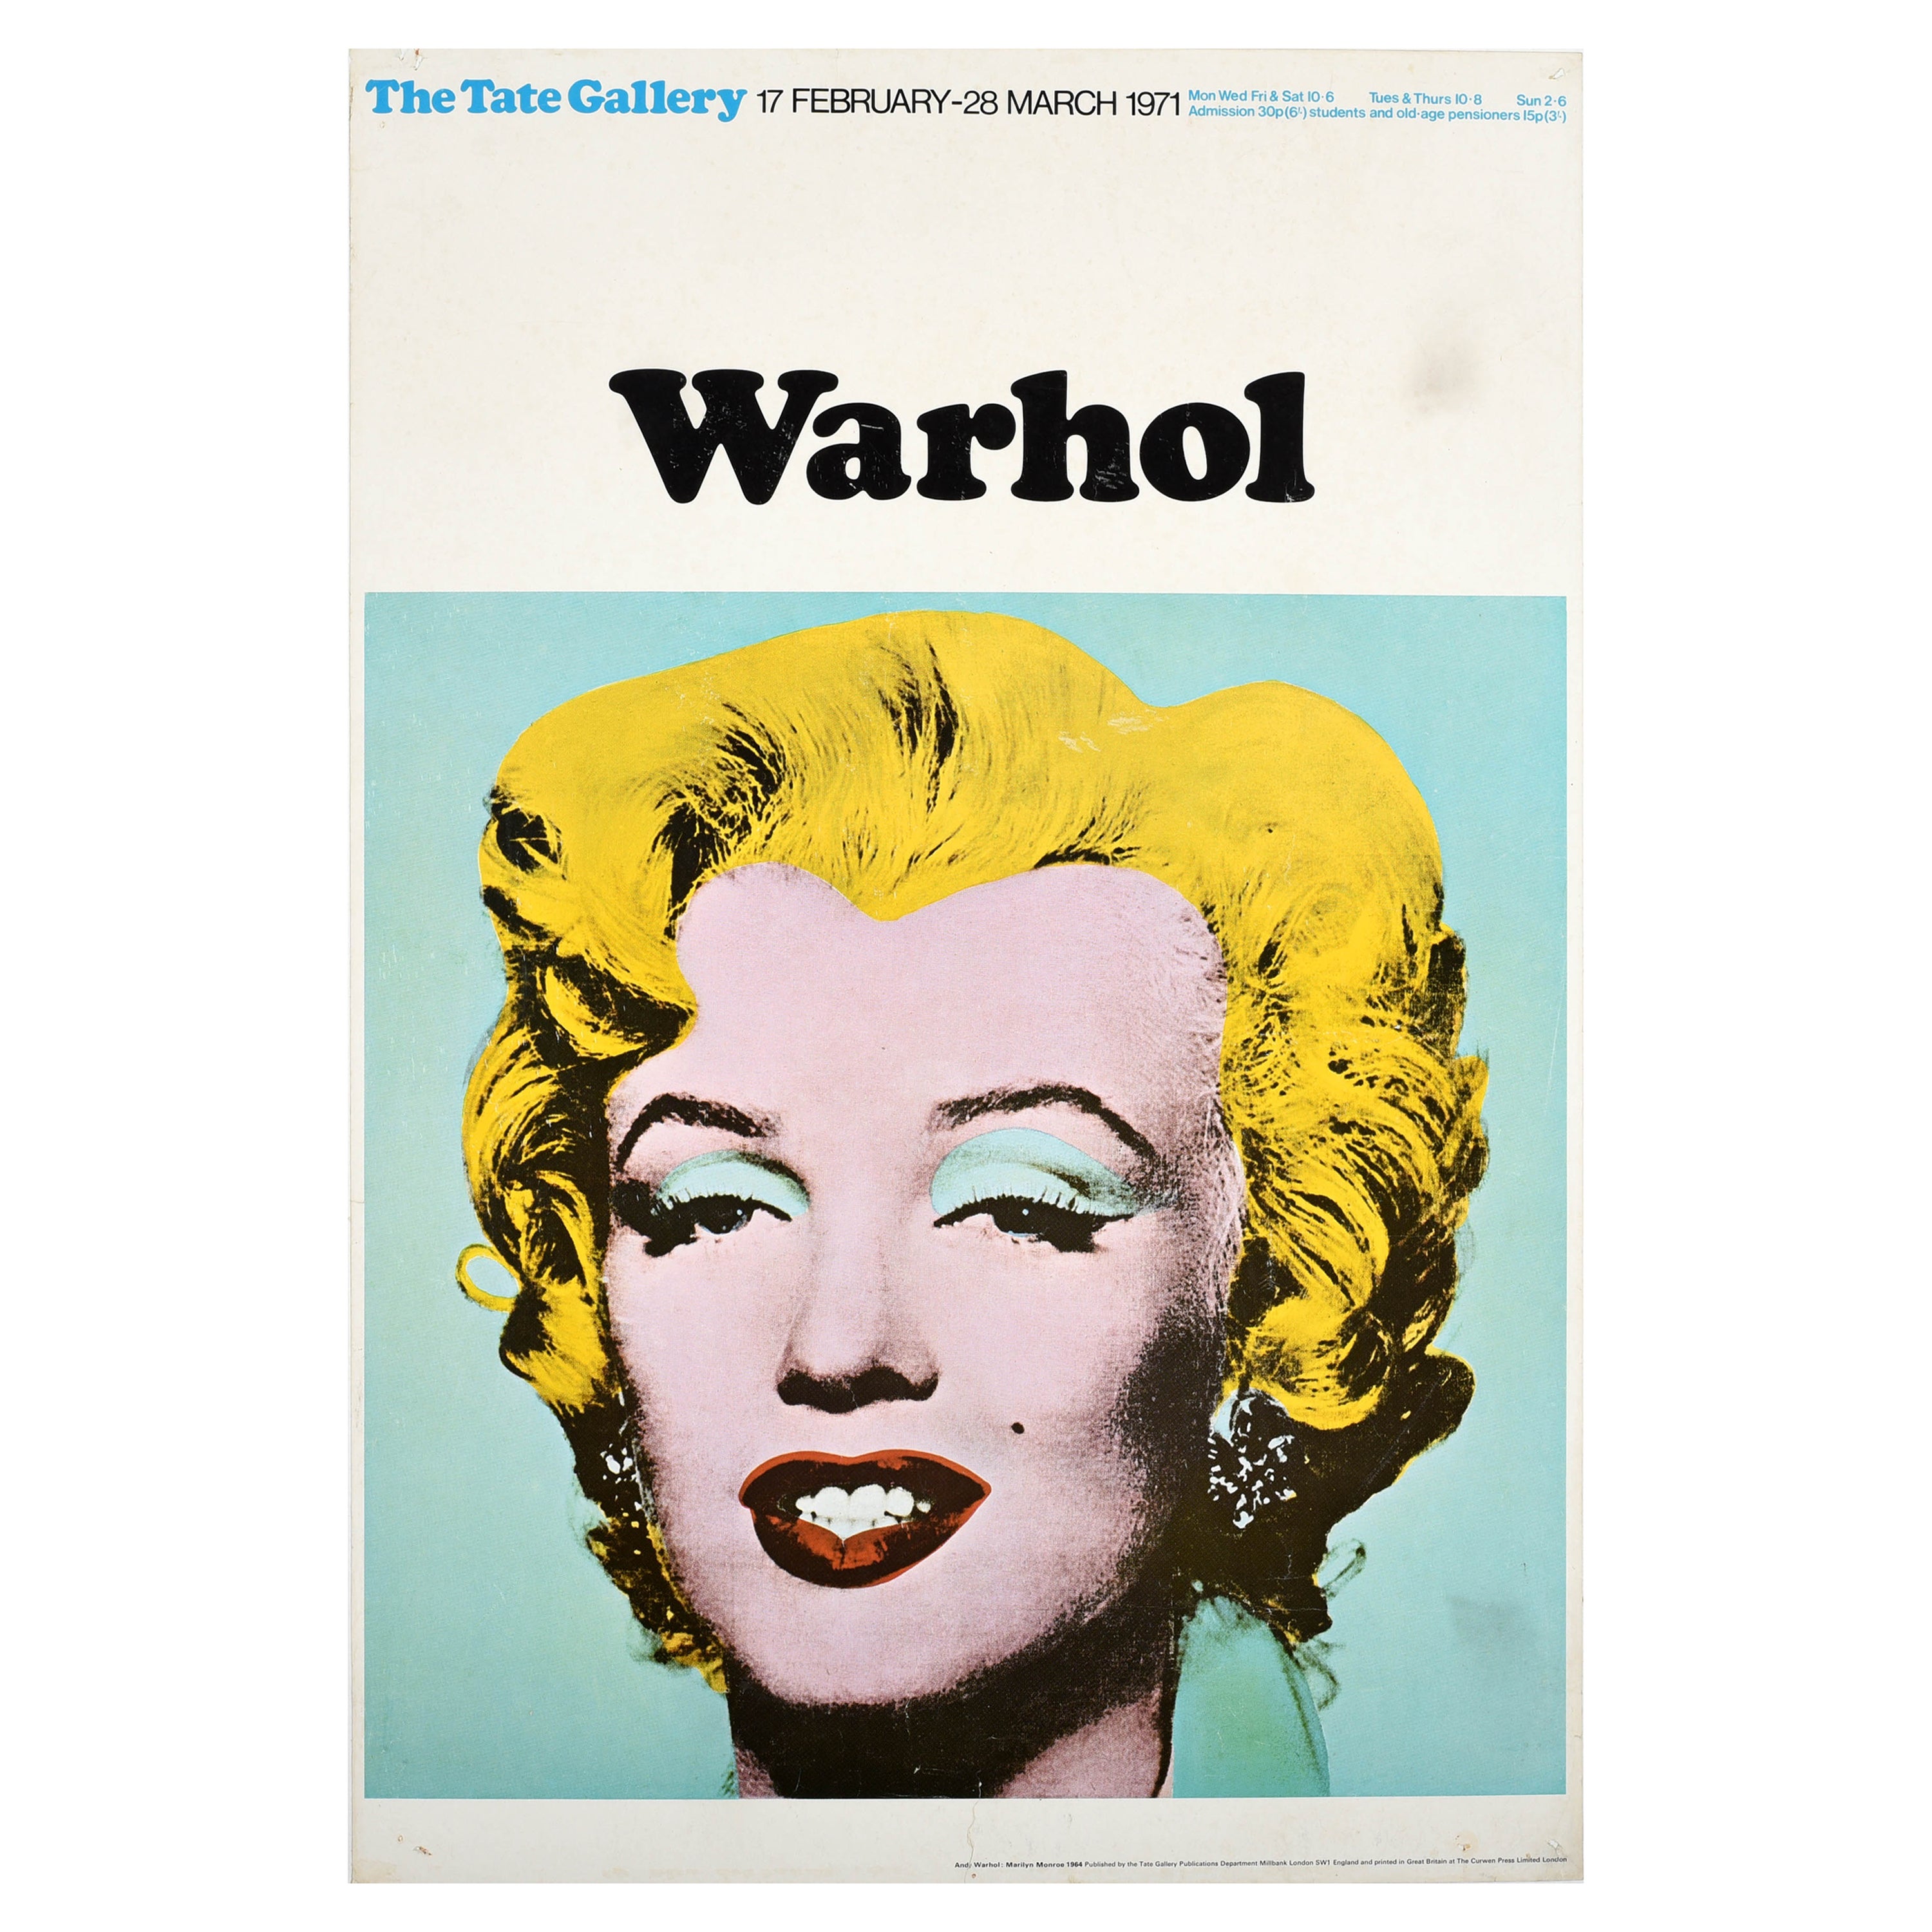 Warhol Artwork Marilyn Monroe Pop Art Andy Warhol Exhibition Print Wall Art